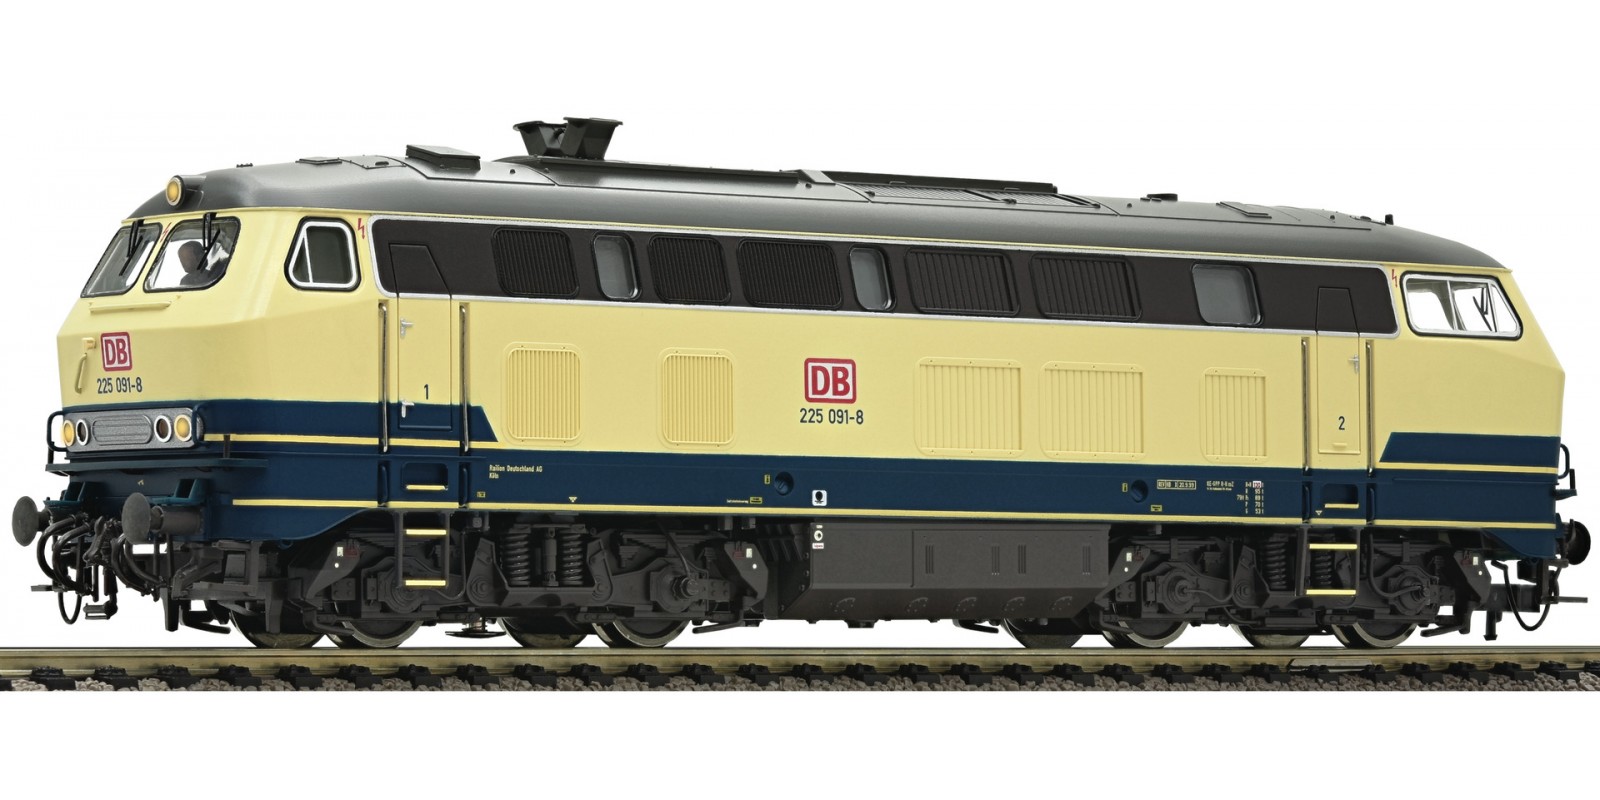 FL424074 - Diesel locomotive class 225, DB AG